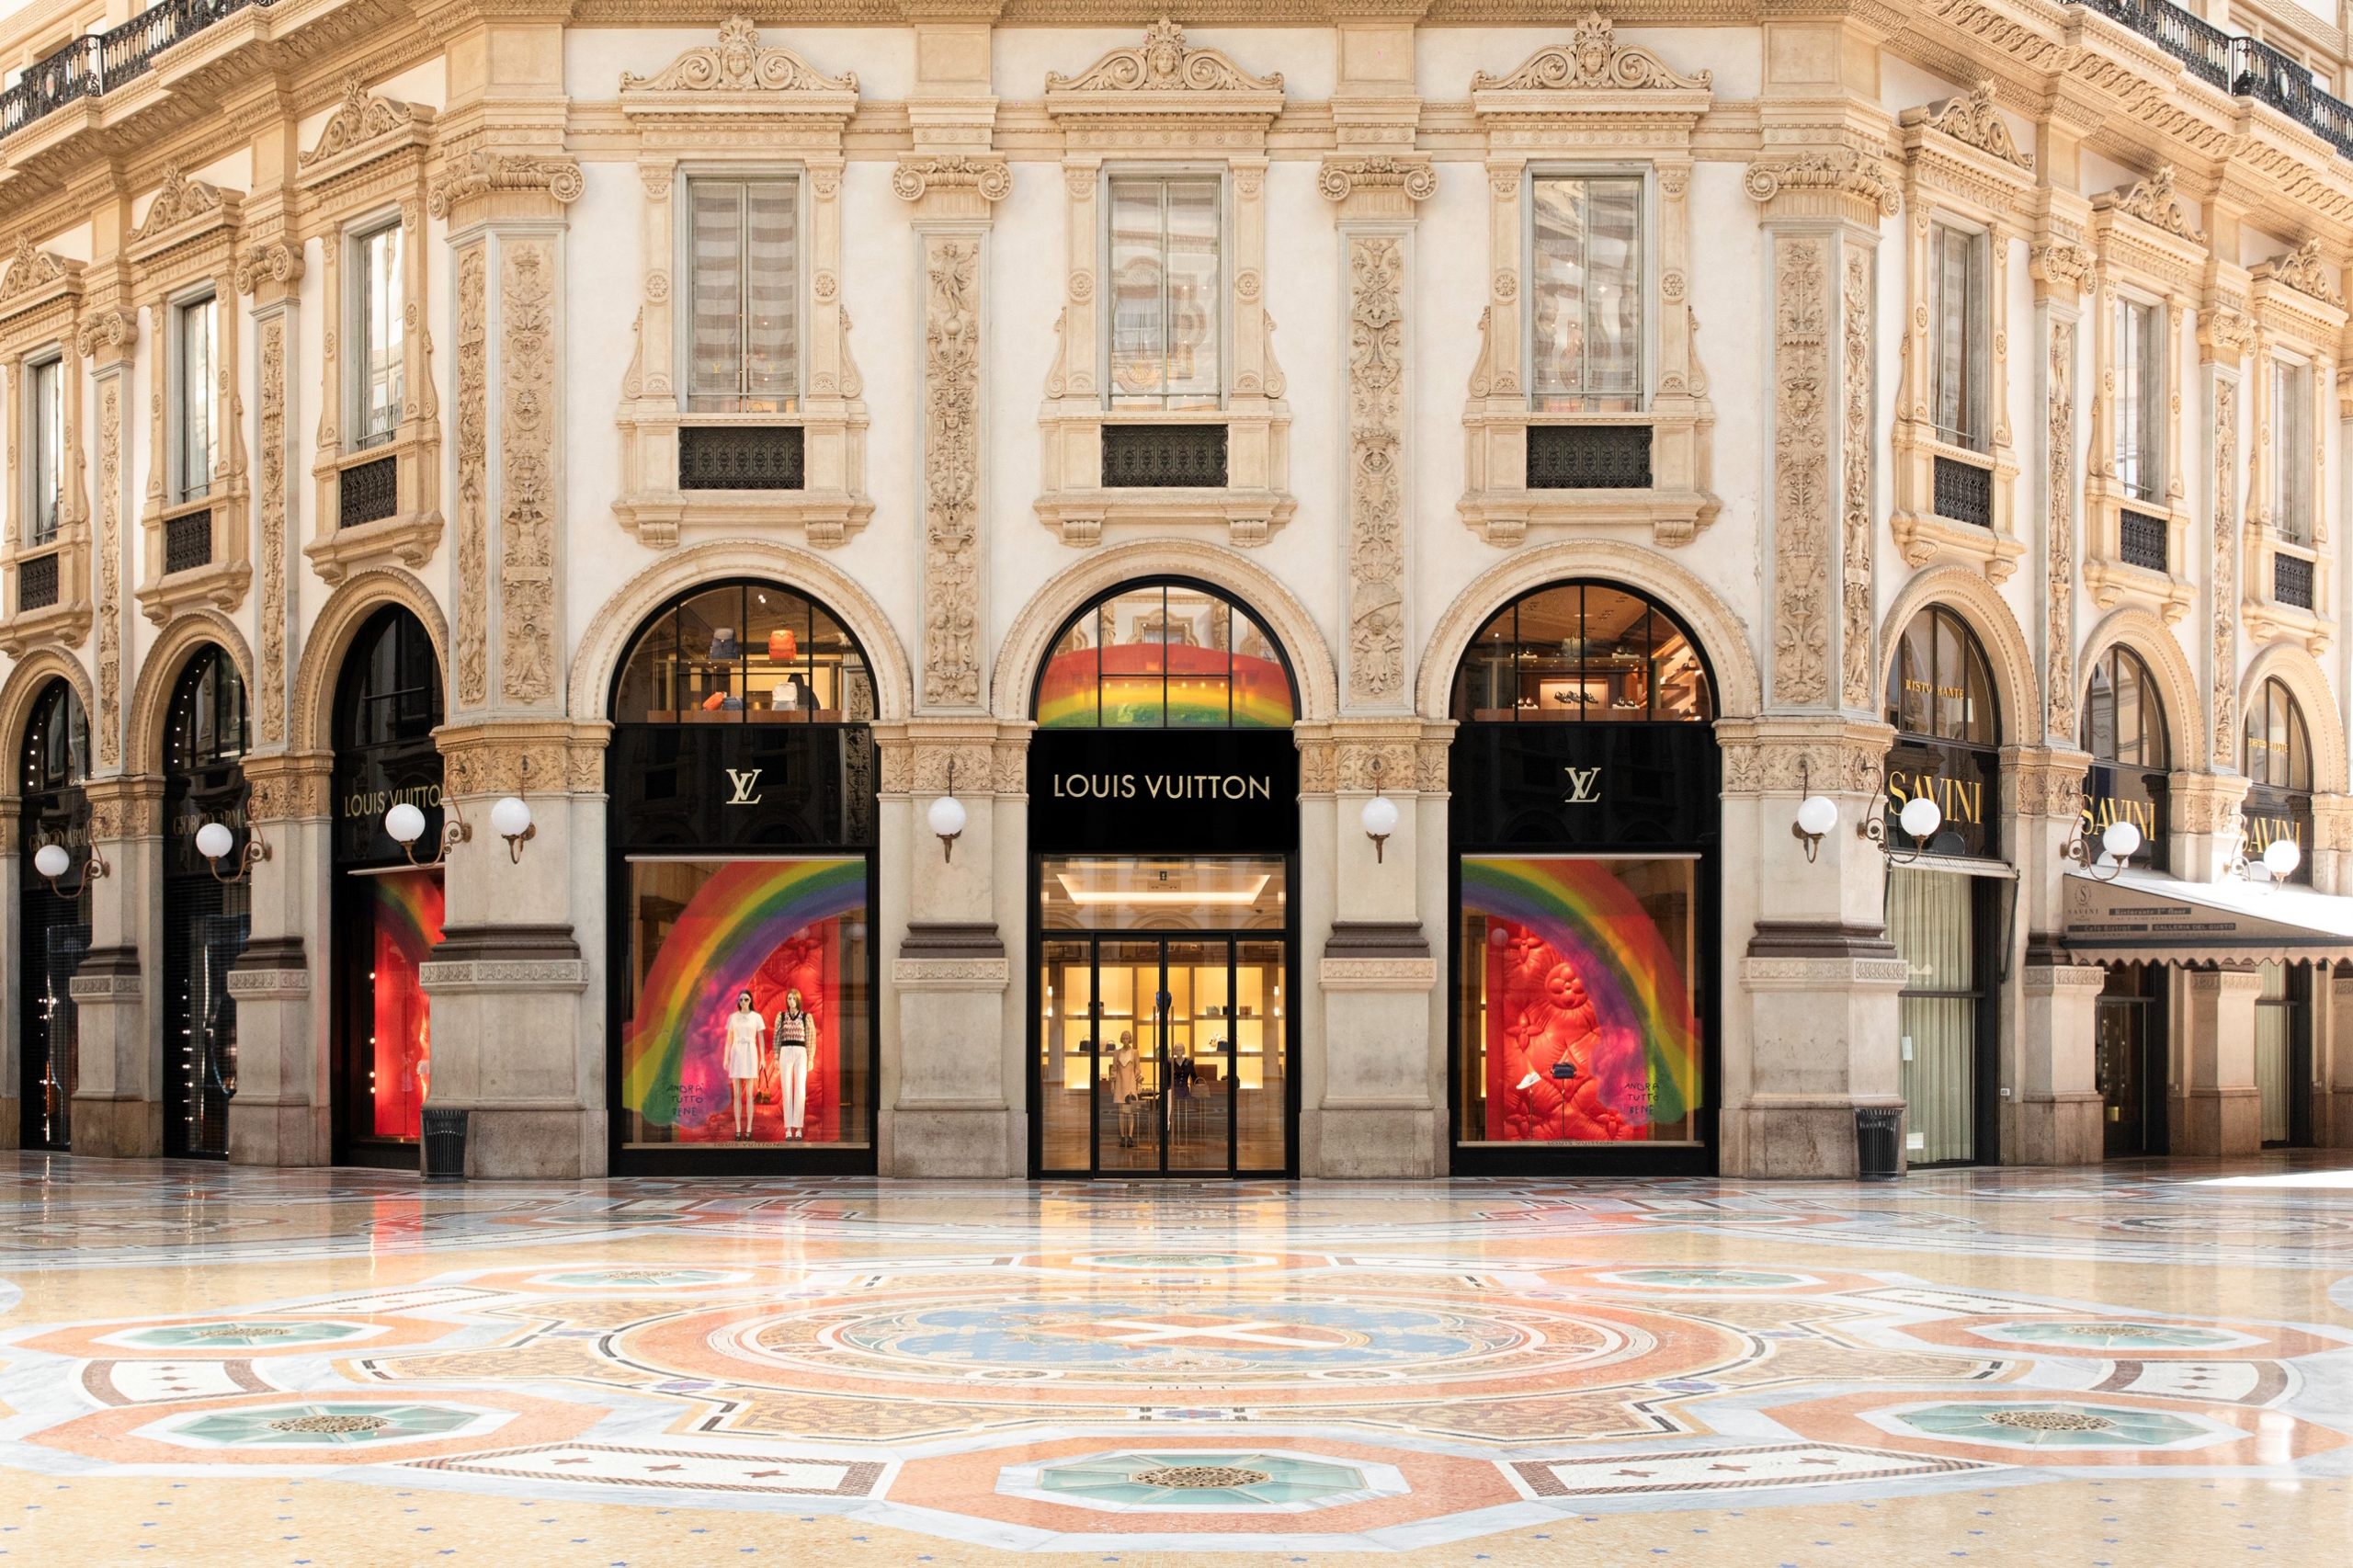 Louis Vuitton shop. Galleria Vittorio Emanuele II. Milan, Italy